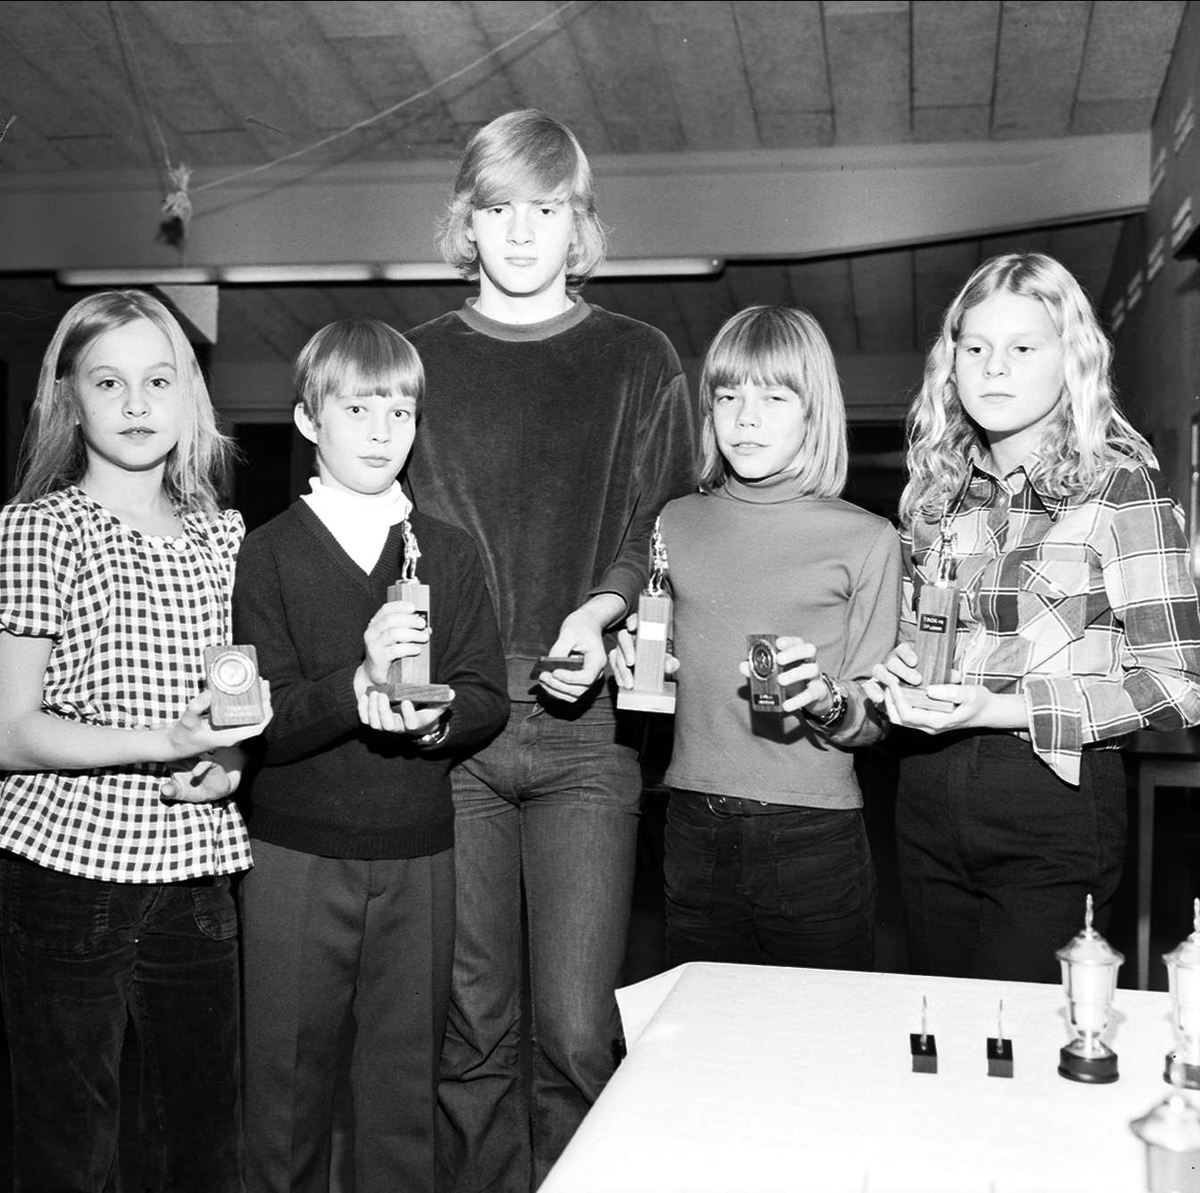 Unga Tierpsorienterare belönade, Tierp, Uppland oktober 1972